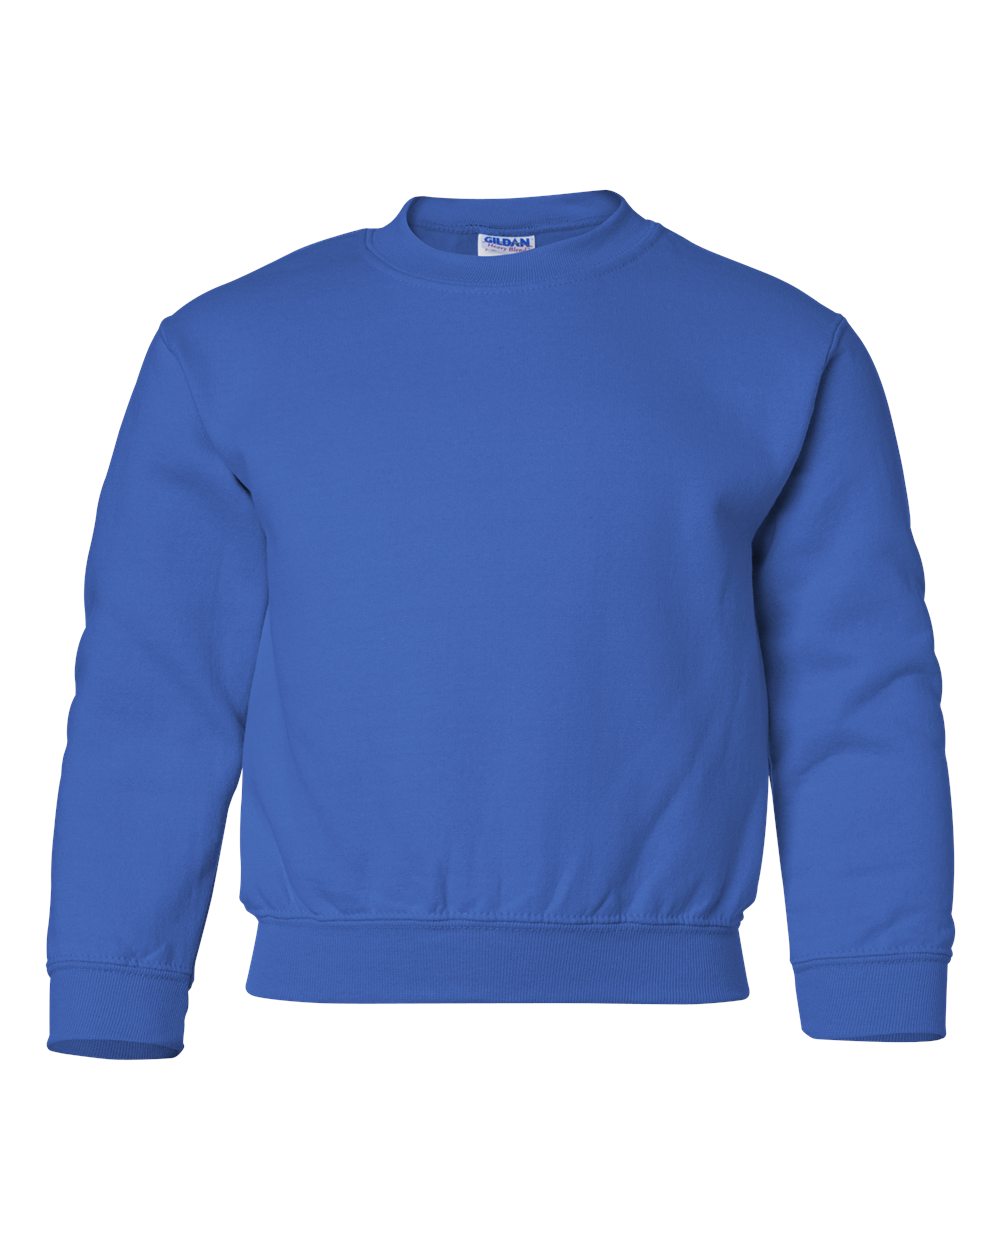 Gildan Youth Crewneck Sweatshirt (18000b) in Royal